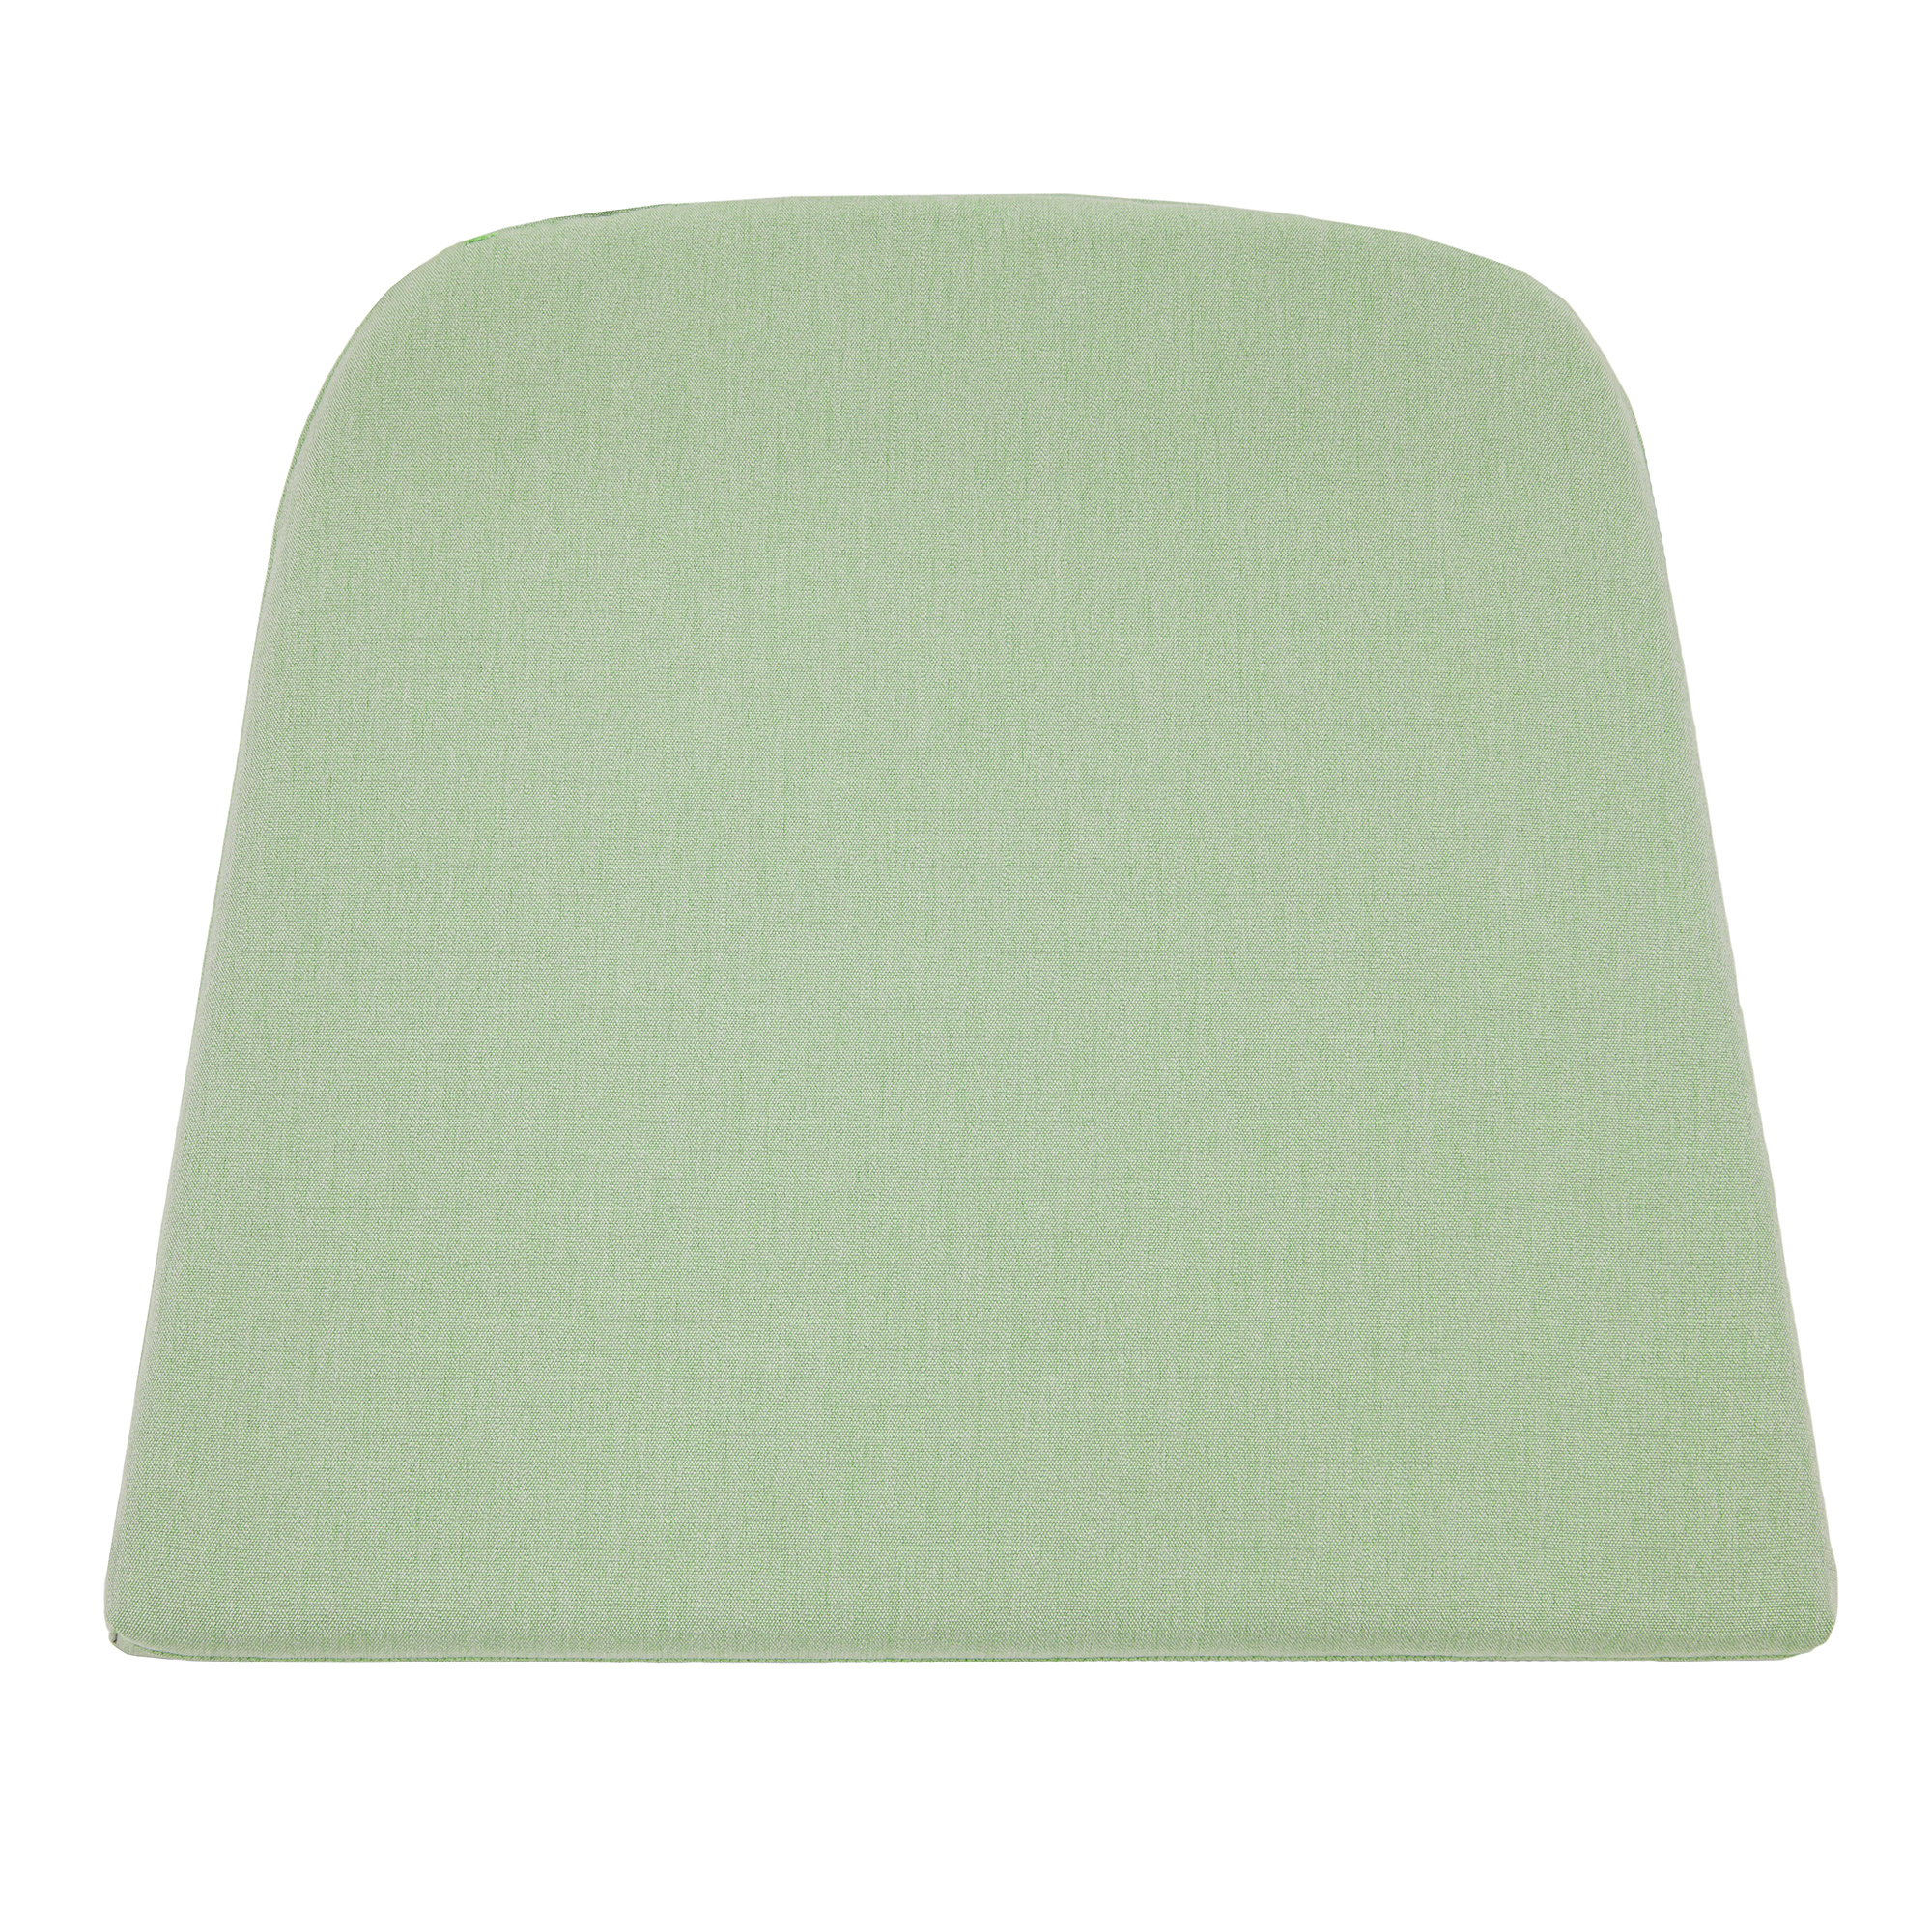 Подушка для кресла Nardi net зеленая (3632600071)